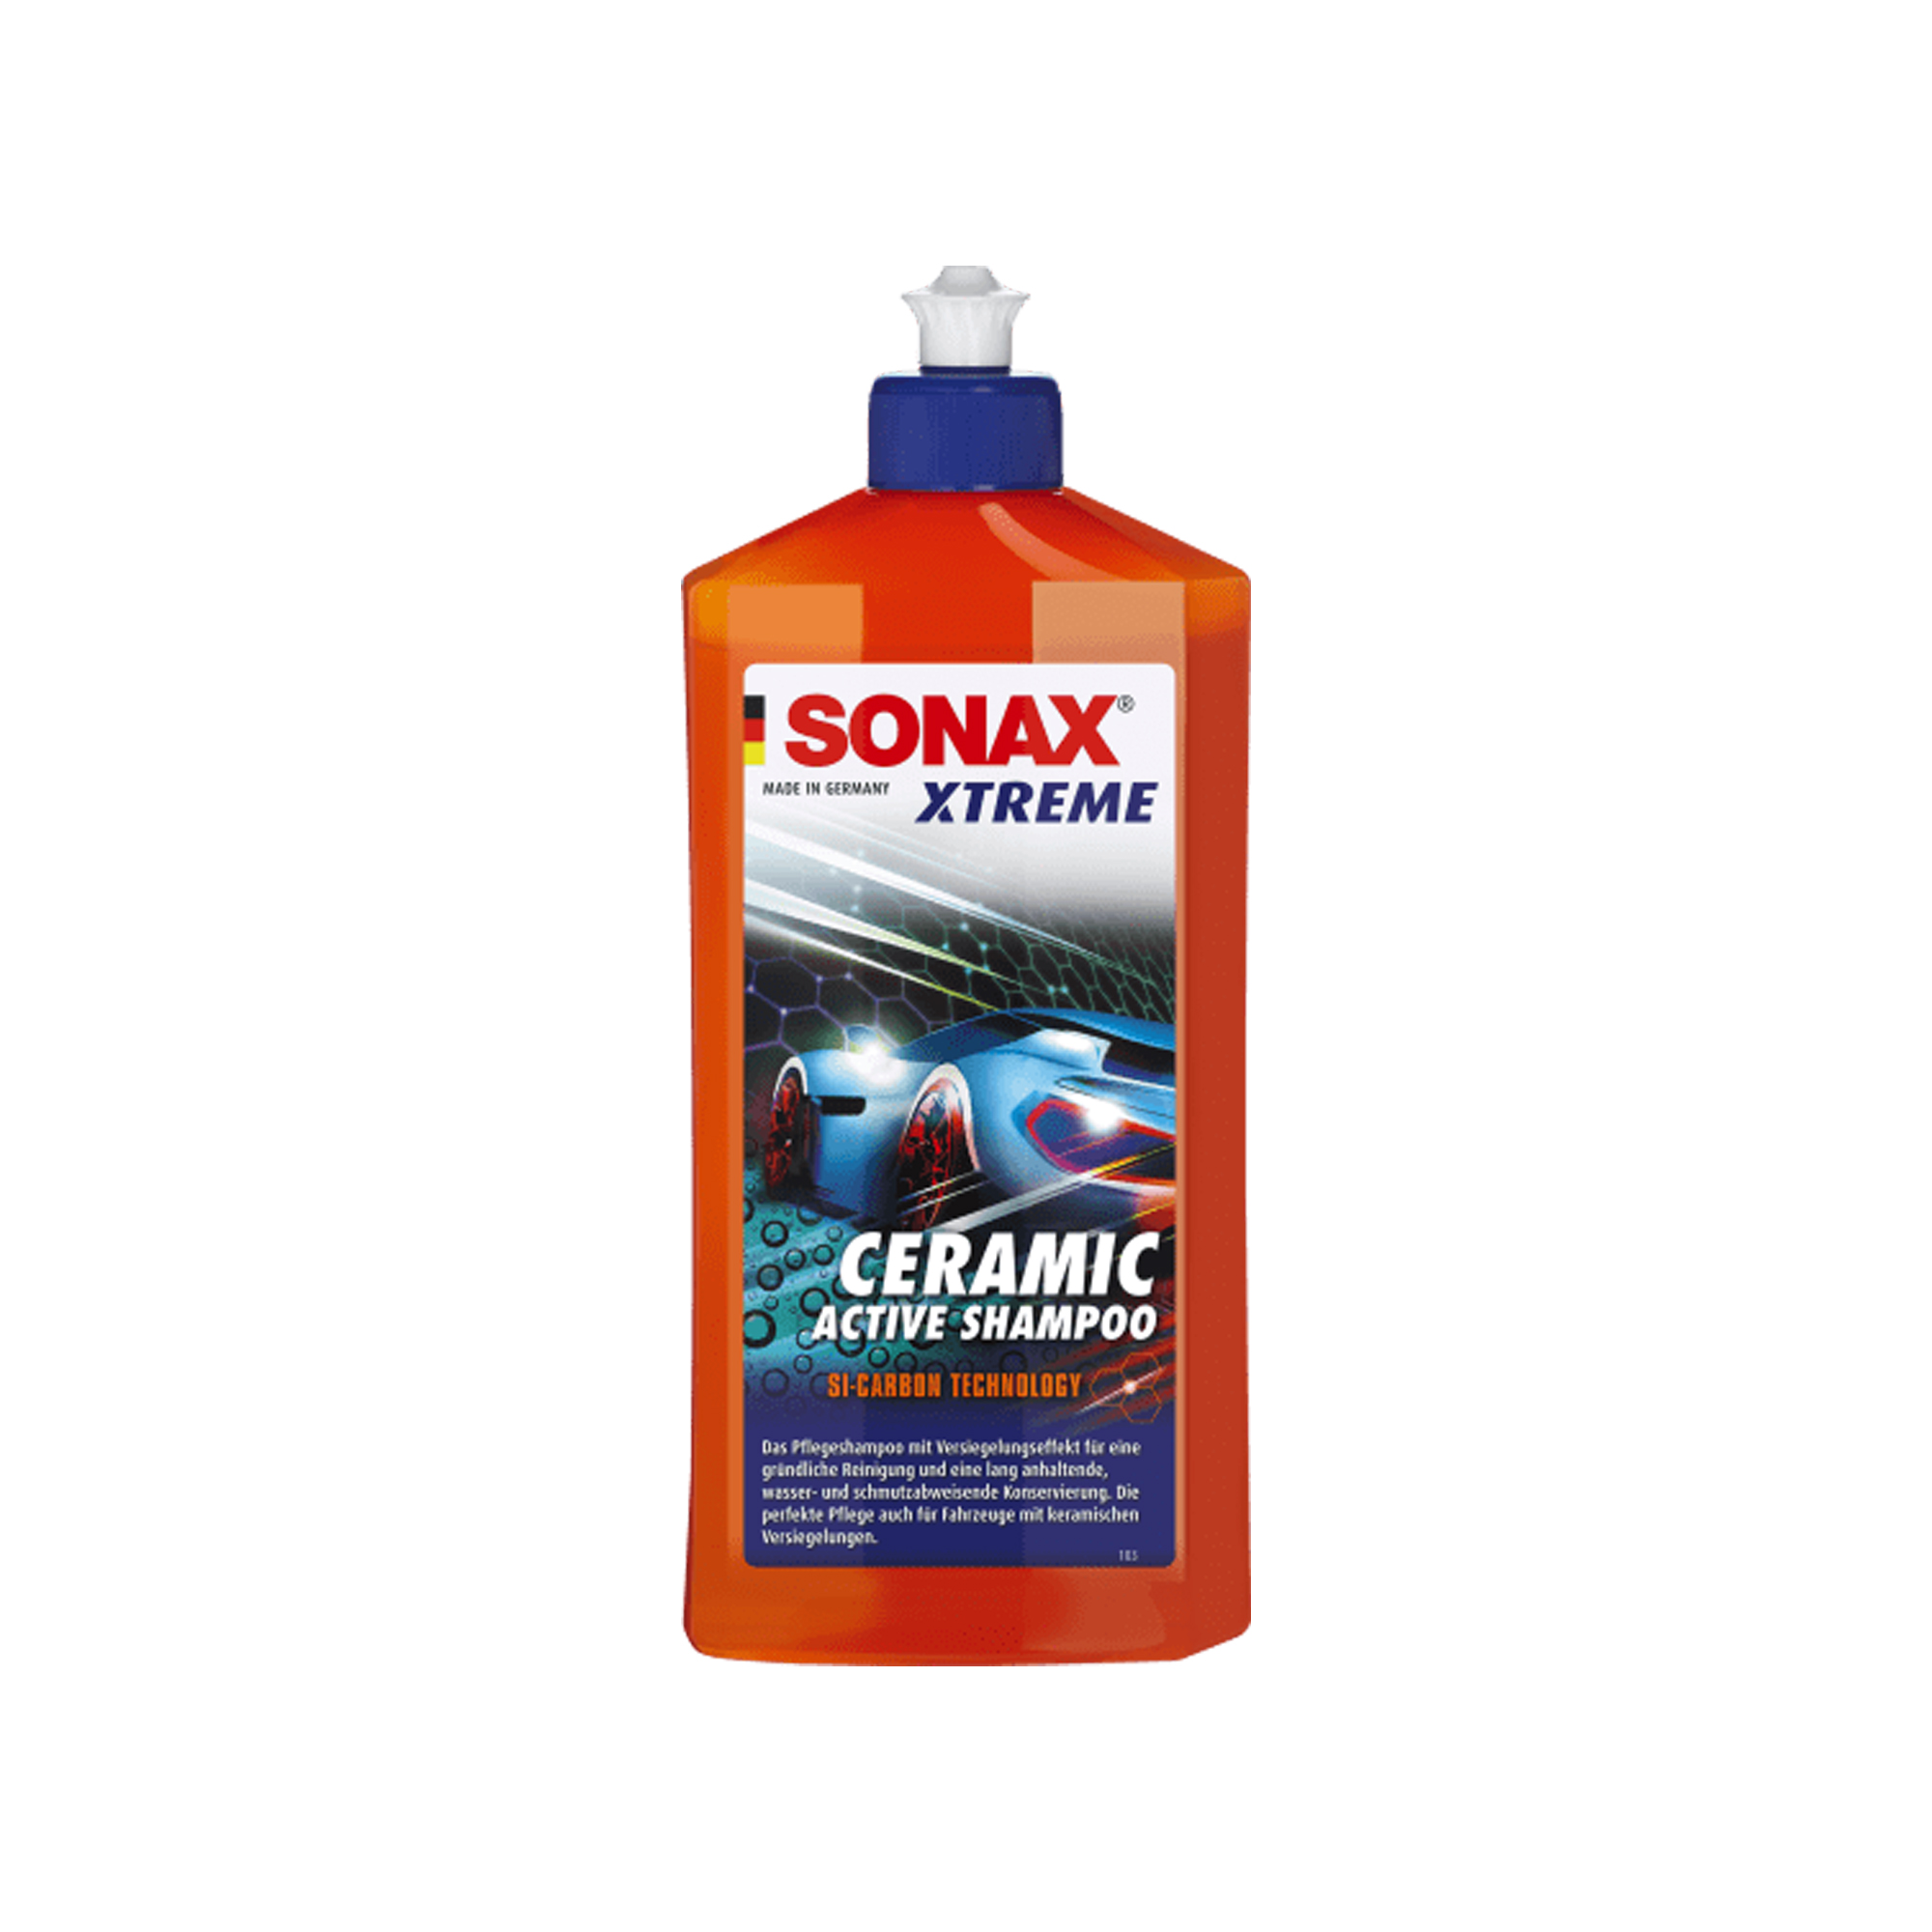 Sonax Ceramic Shampoo